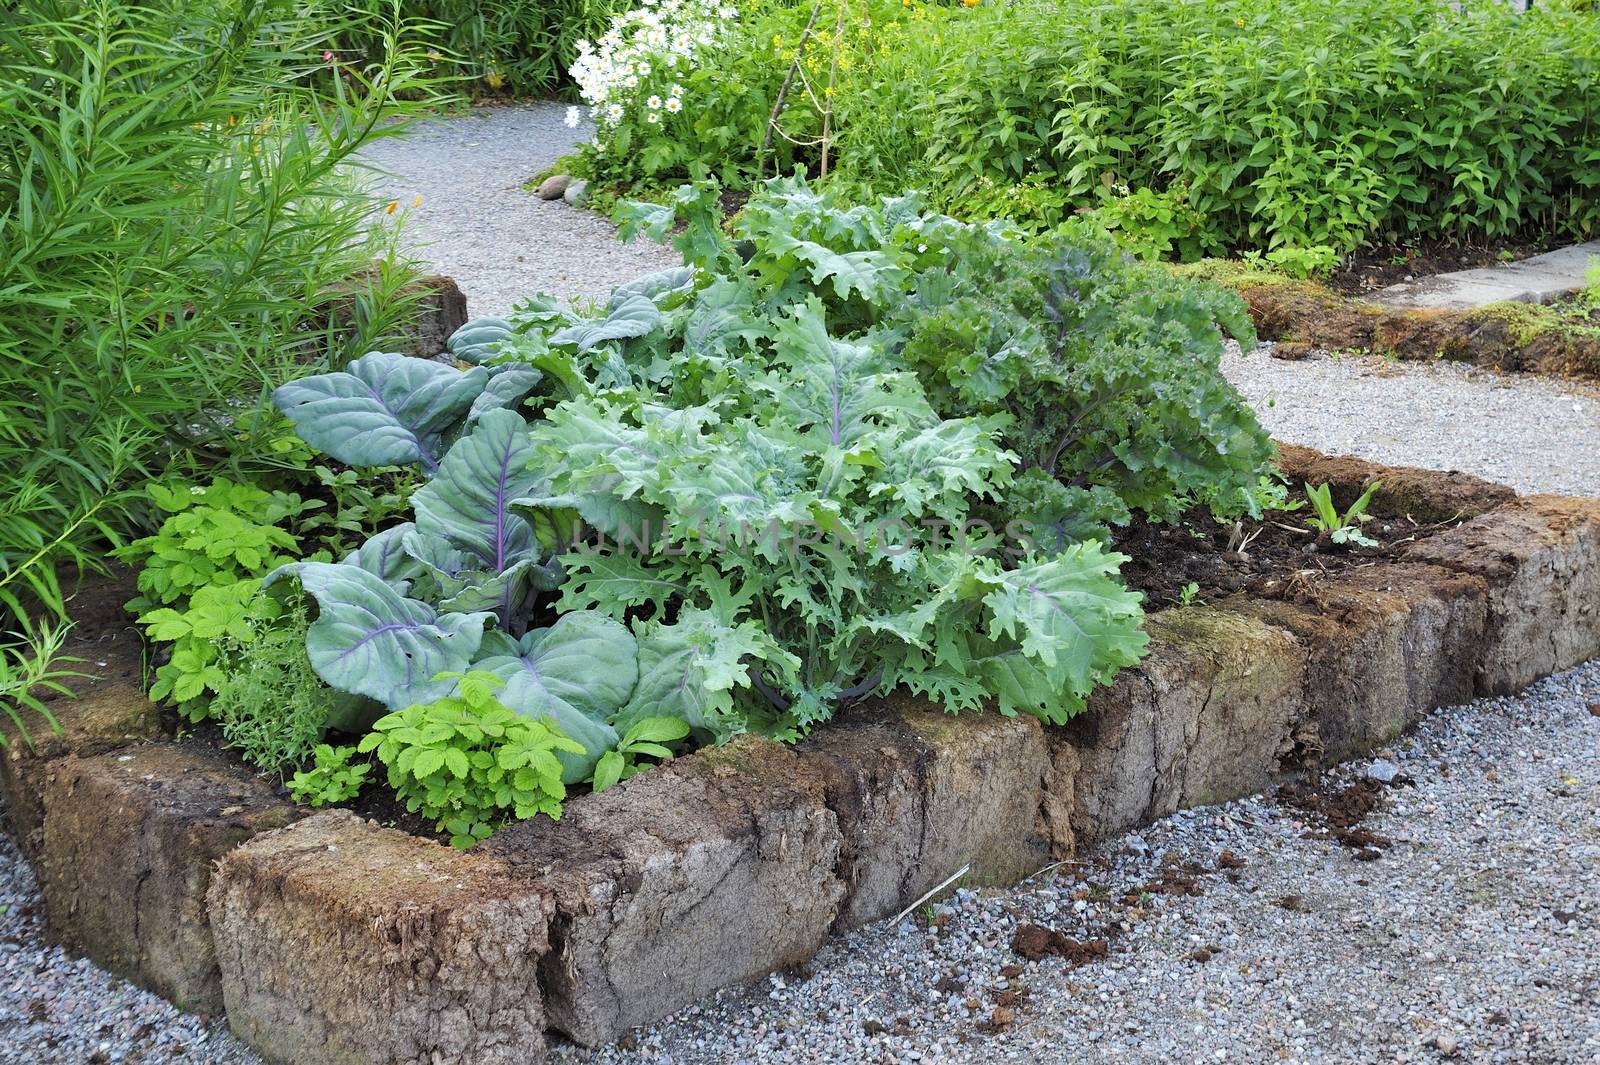 Organic Gardening on the Allotment